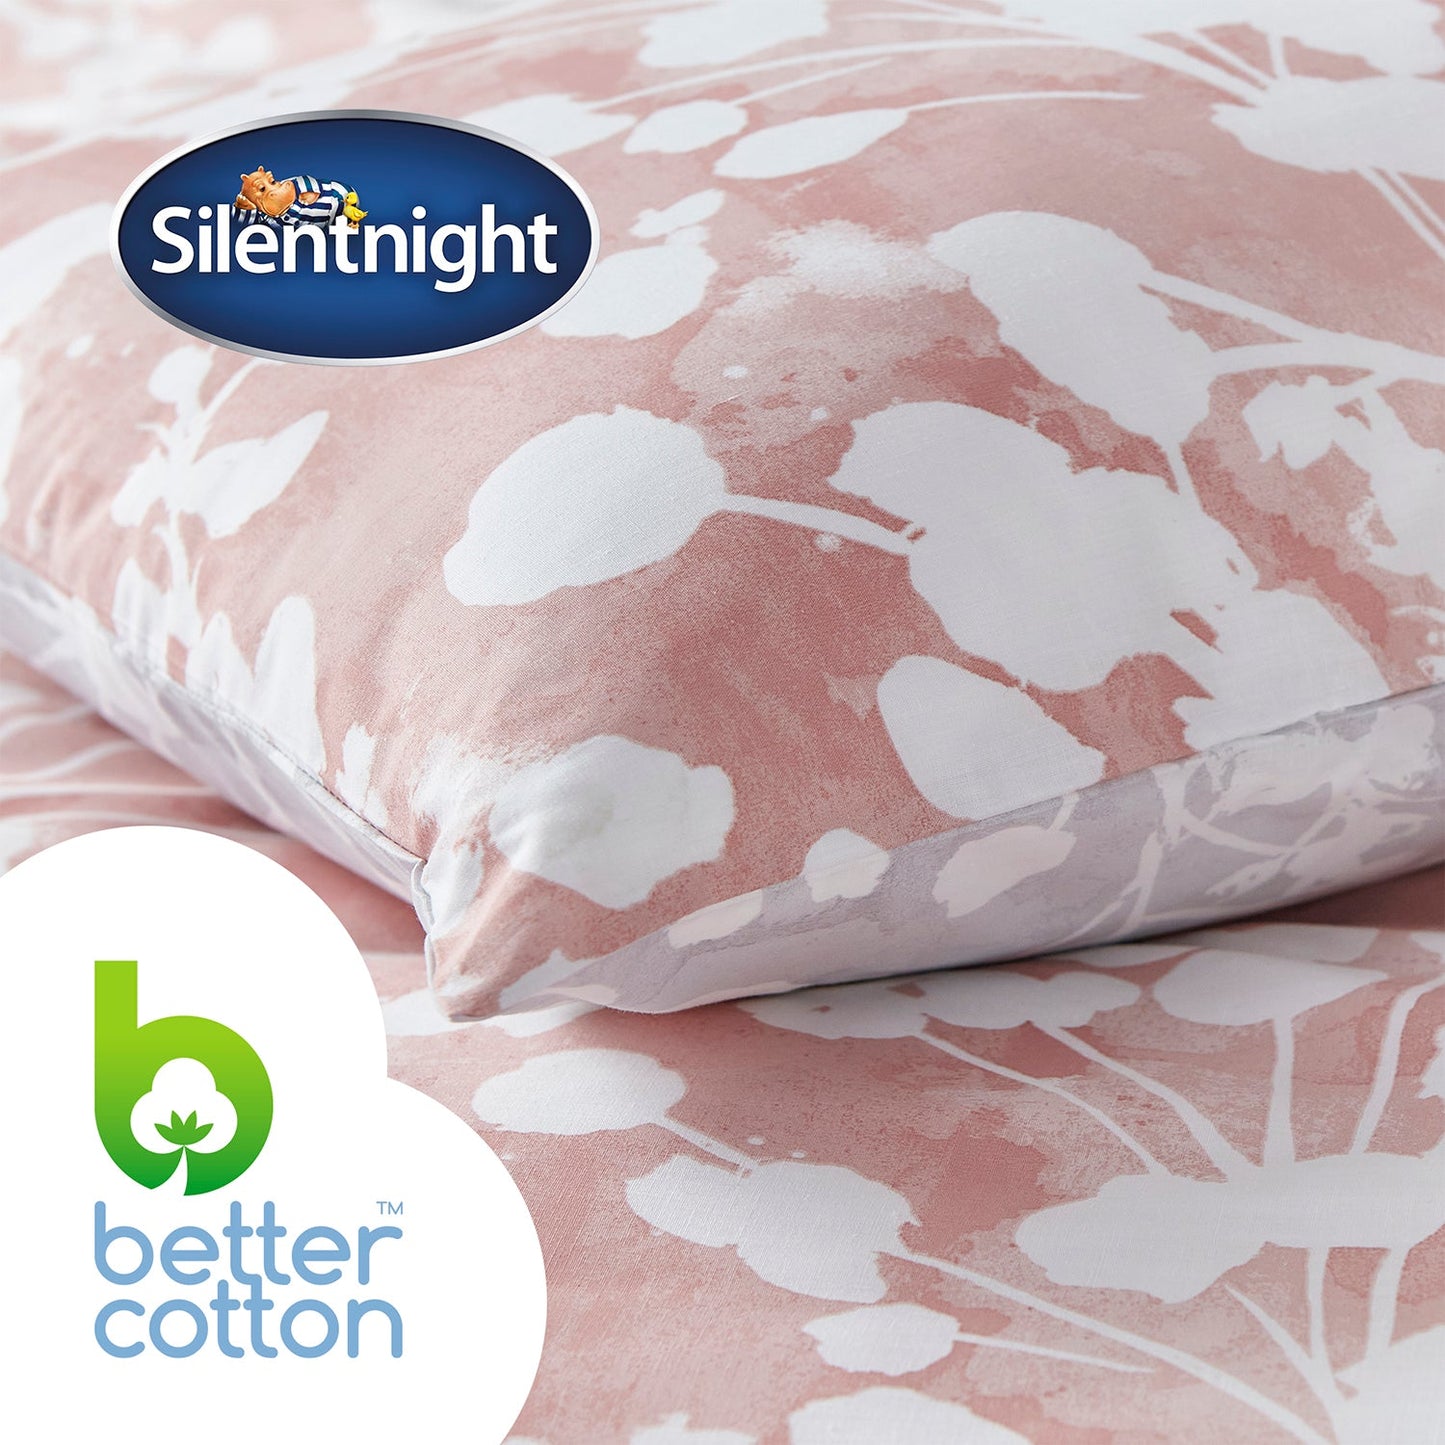 Silentnight Sustainable Blossom Blush Pink Duvet Set